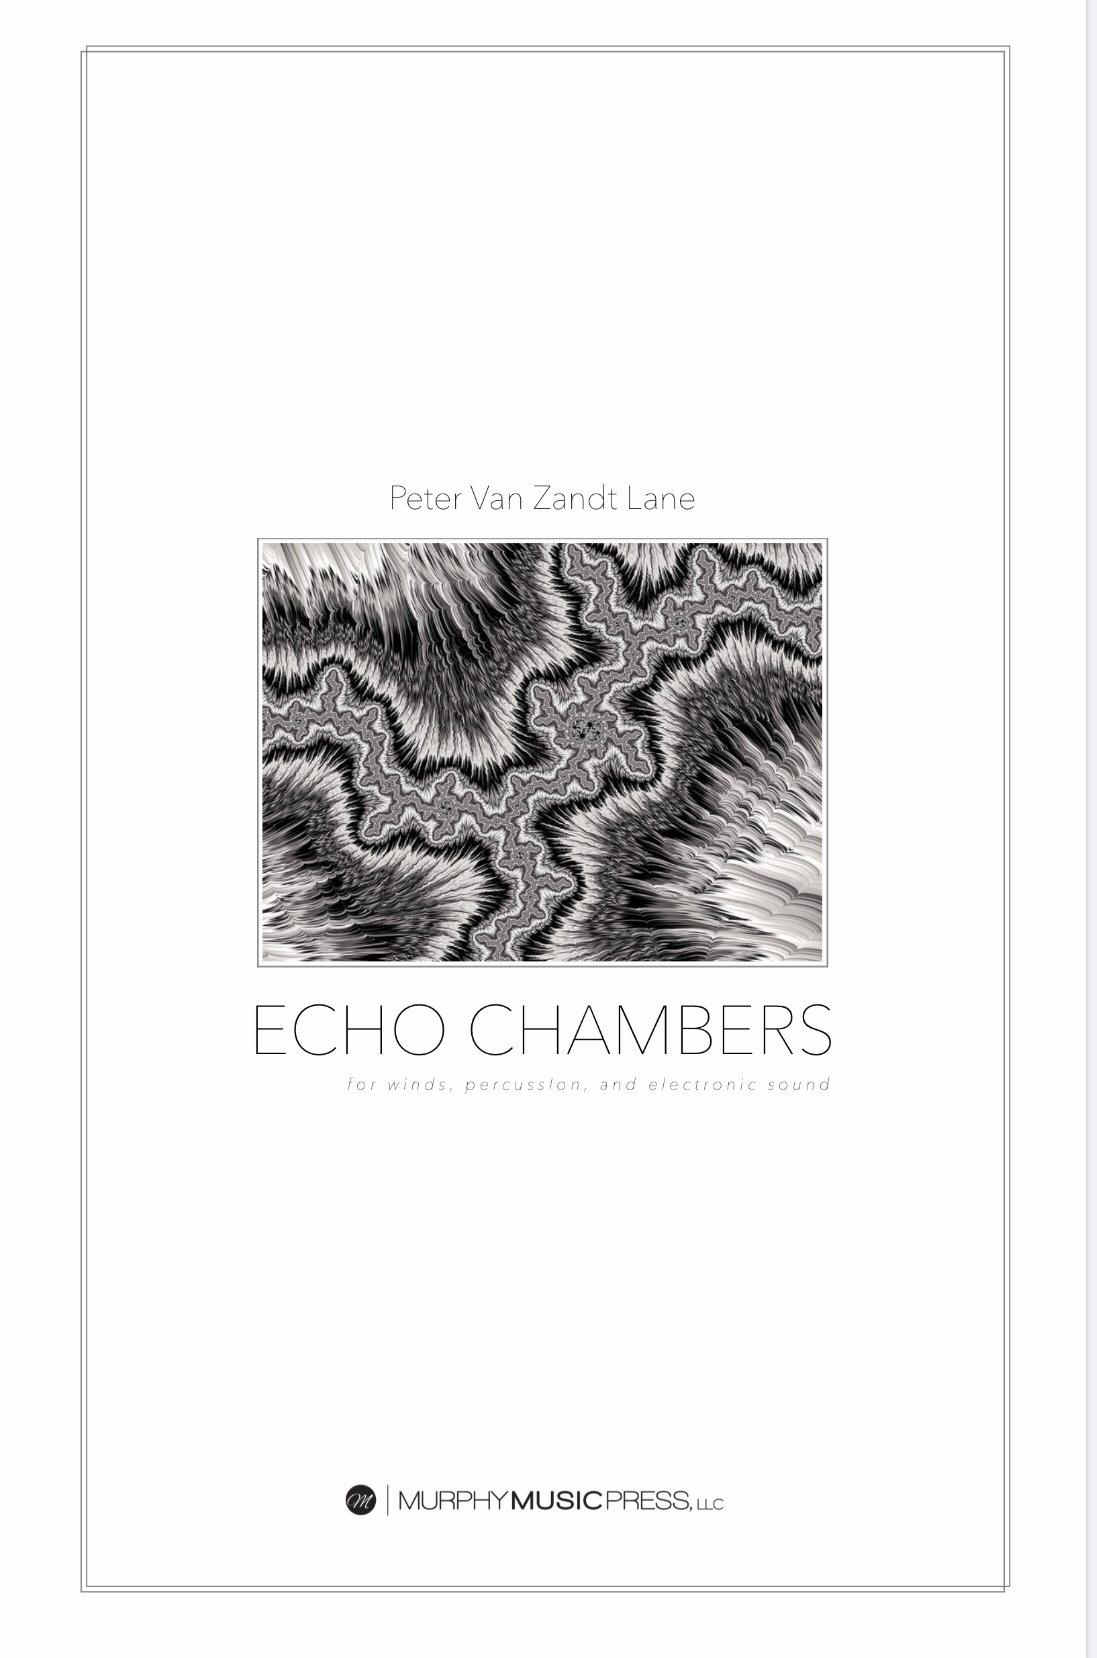 Echo Chambers by Peter Van Zandt Lane